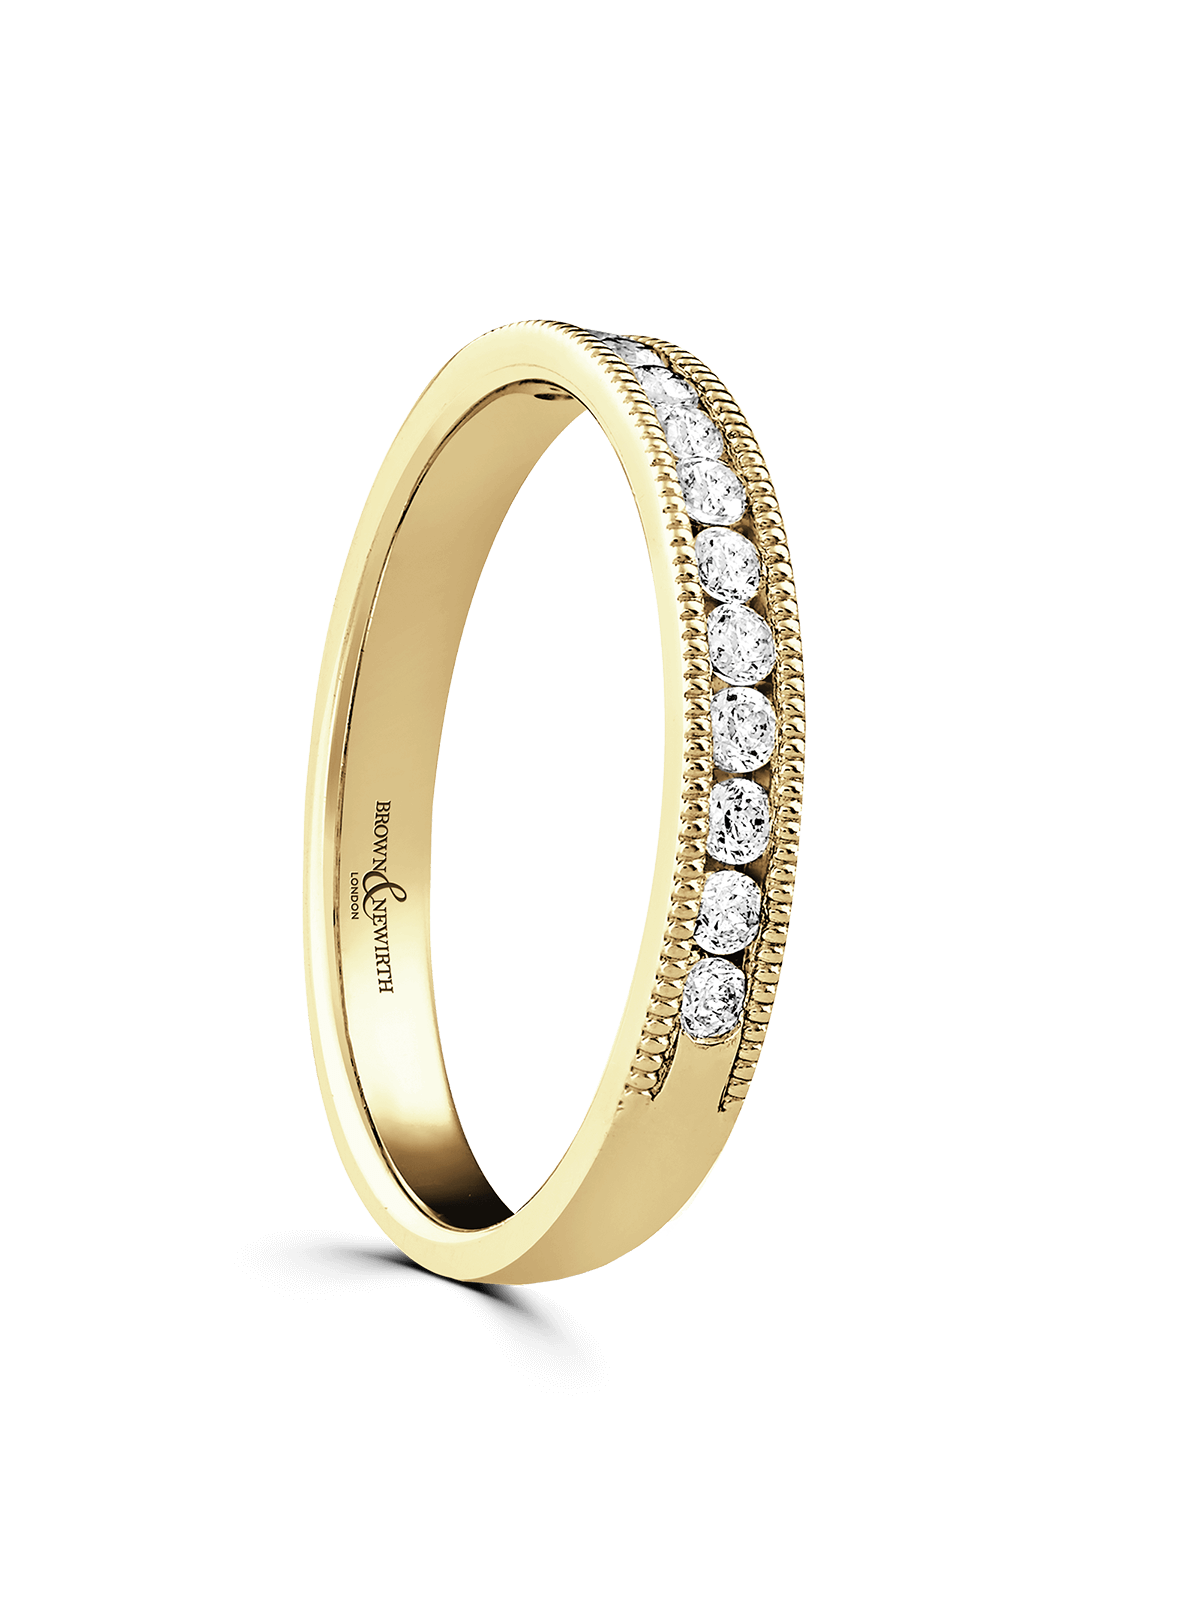 Brown & Newirth Everlasting 0.20ct Brilliant Cut Diamond Eternity Ring in 18ct Yellow Gold